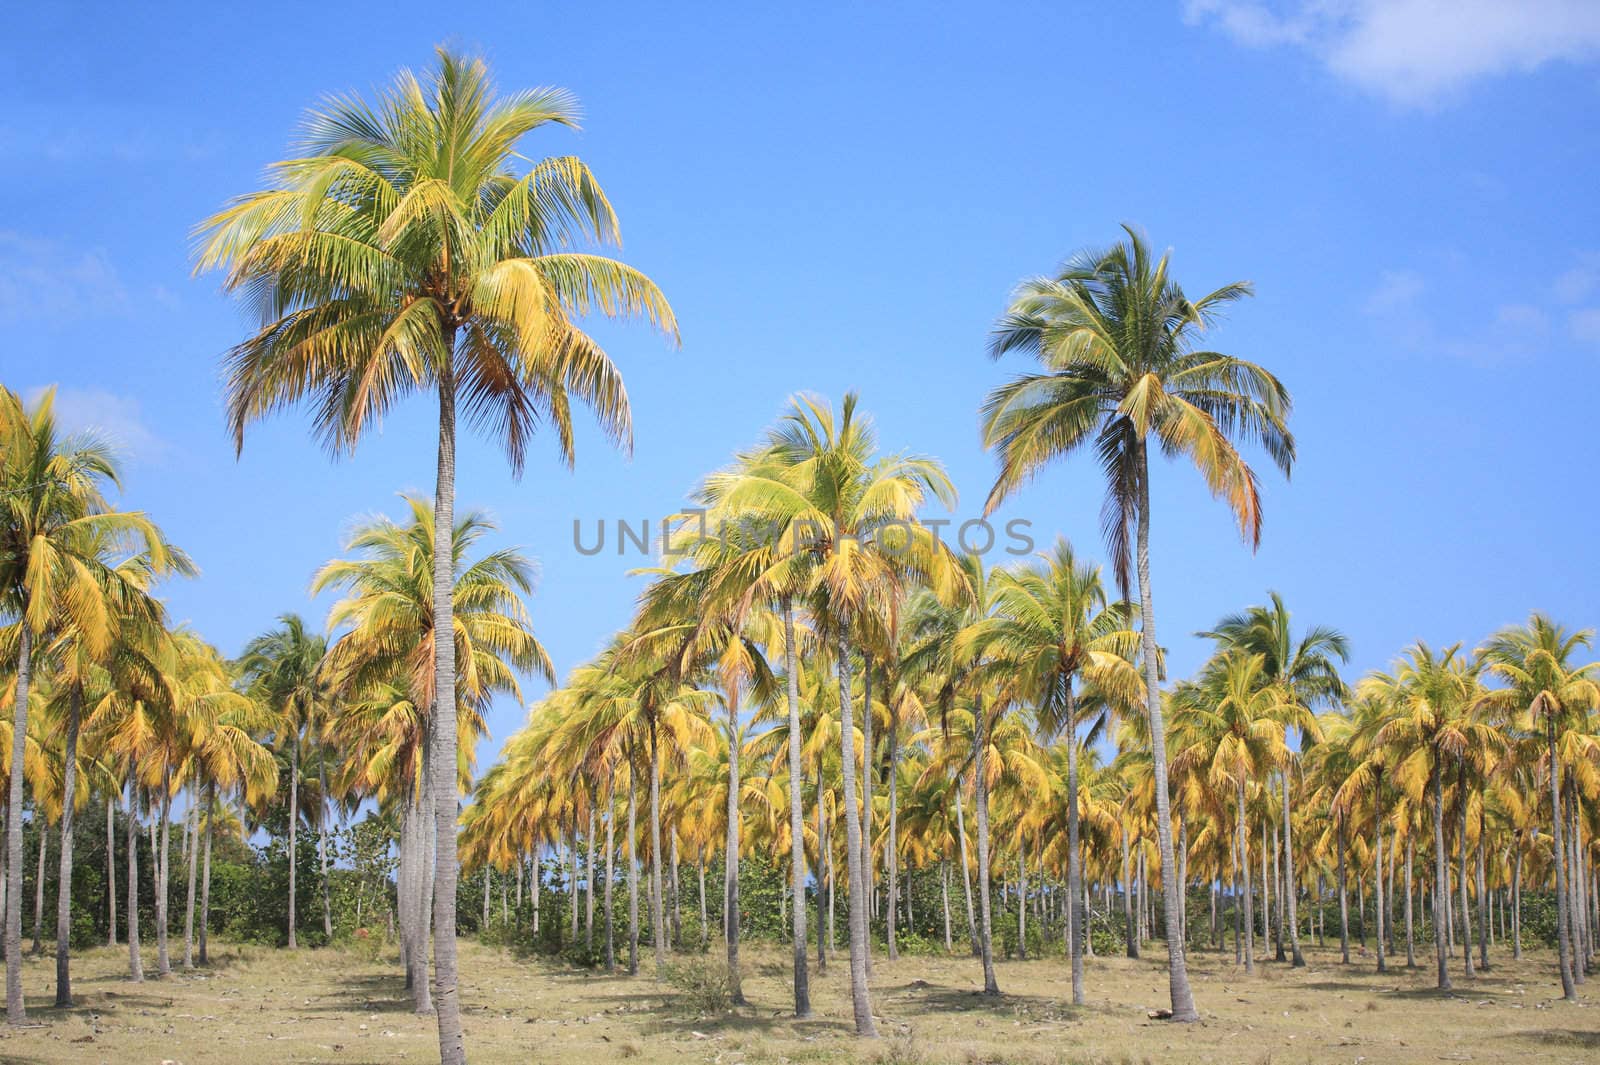 Cocoteros (Coconut Palm Trees) by Brigida_Soriano